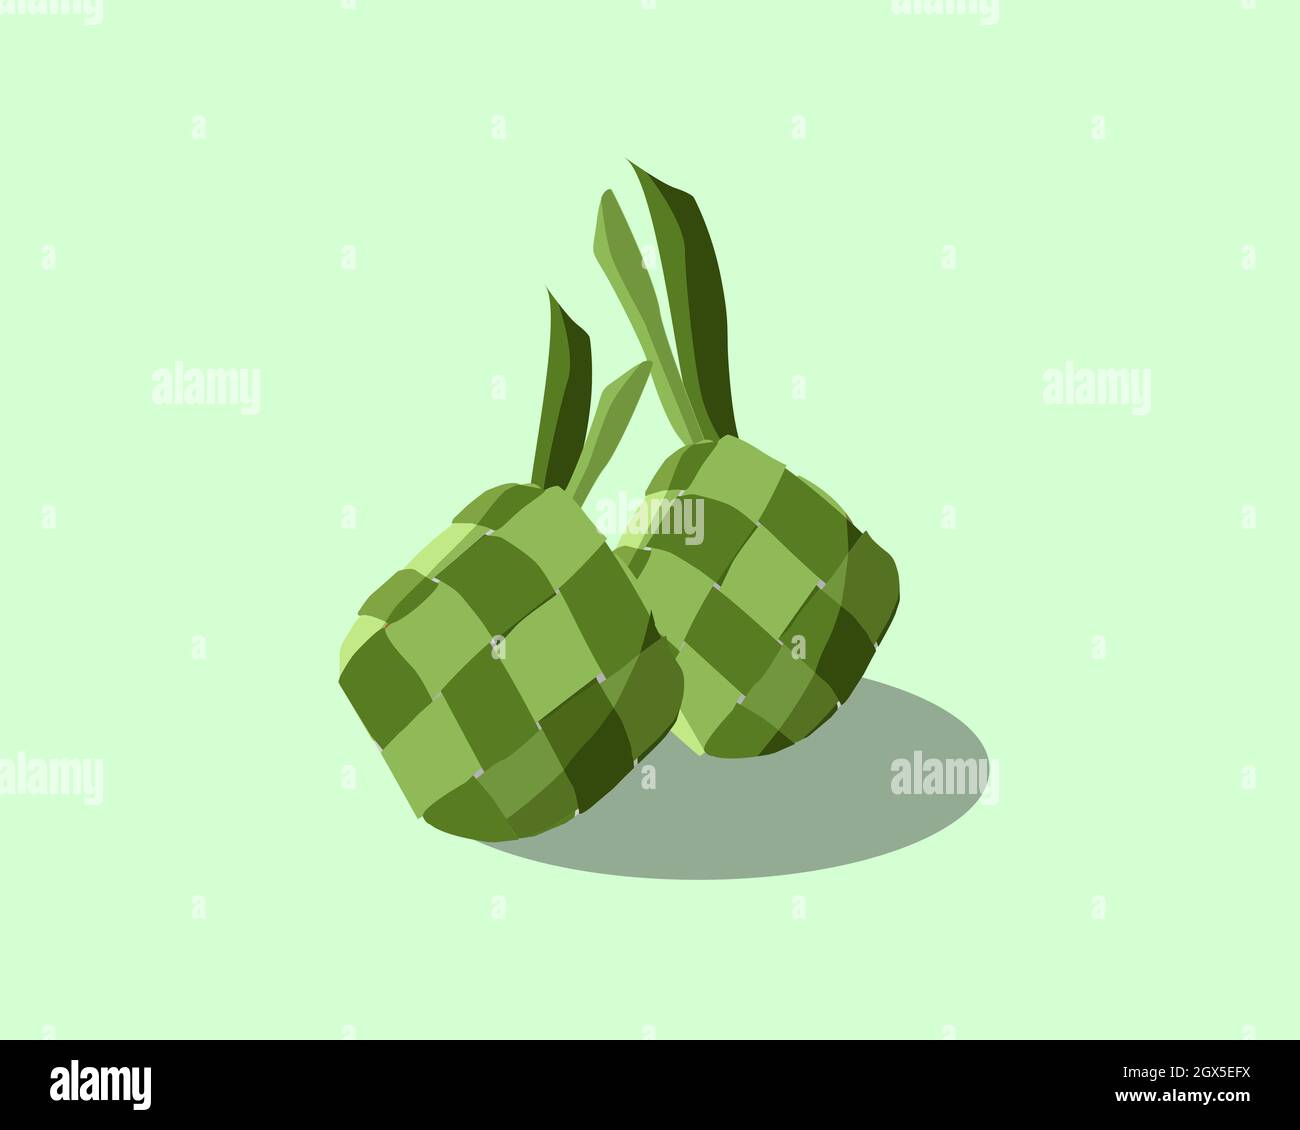 Islamic day food ketupat vector illustration Stock Vector